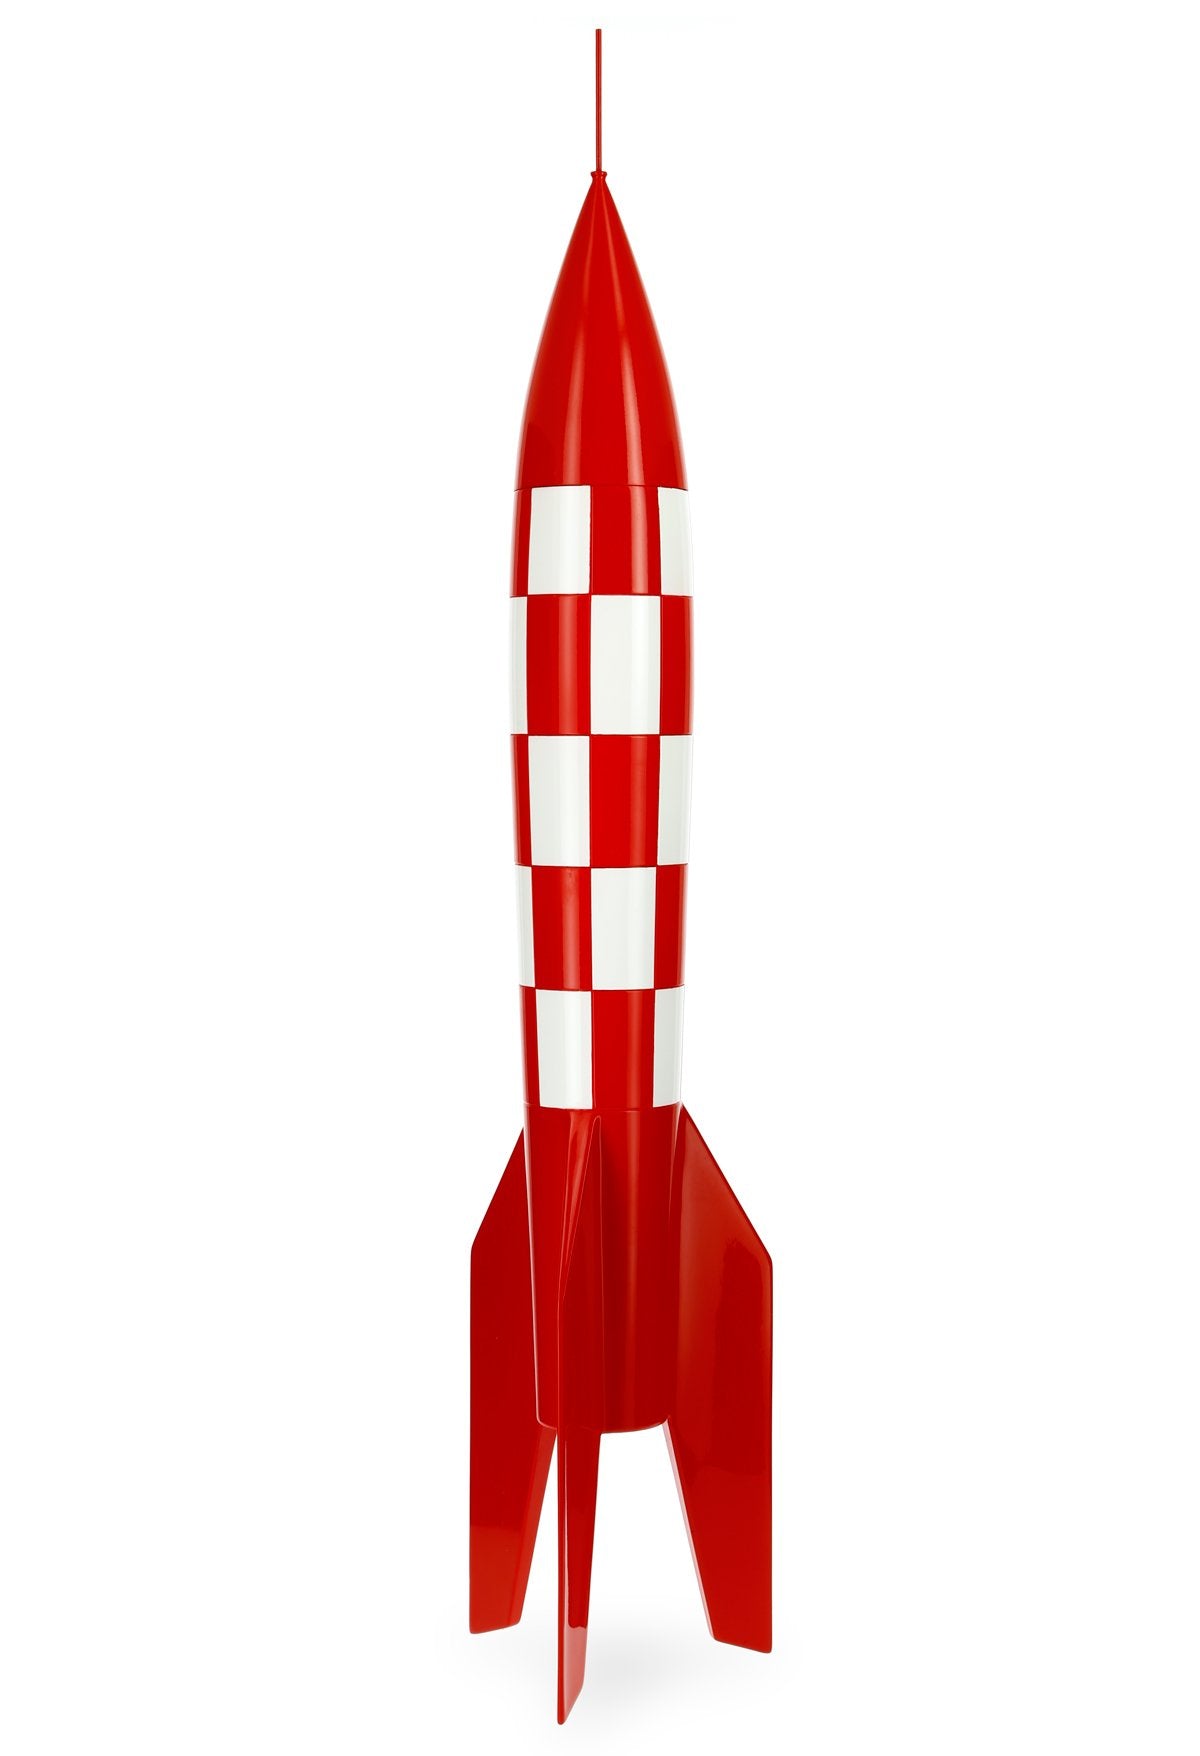 XFLR6 test rocket